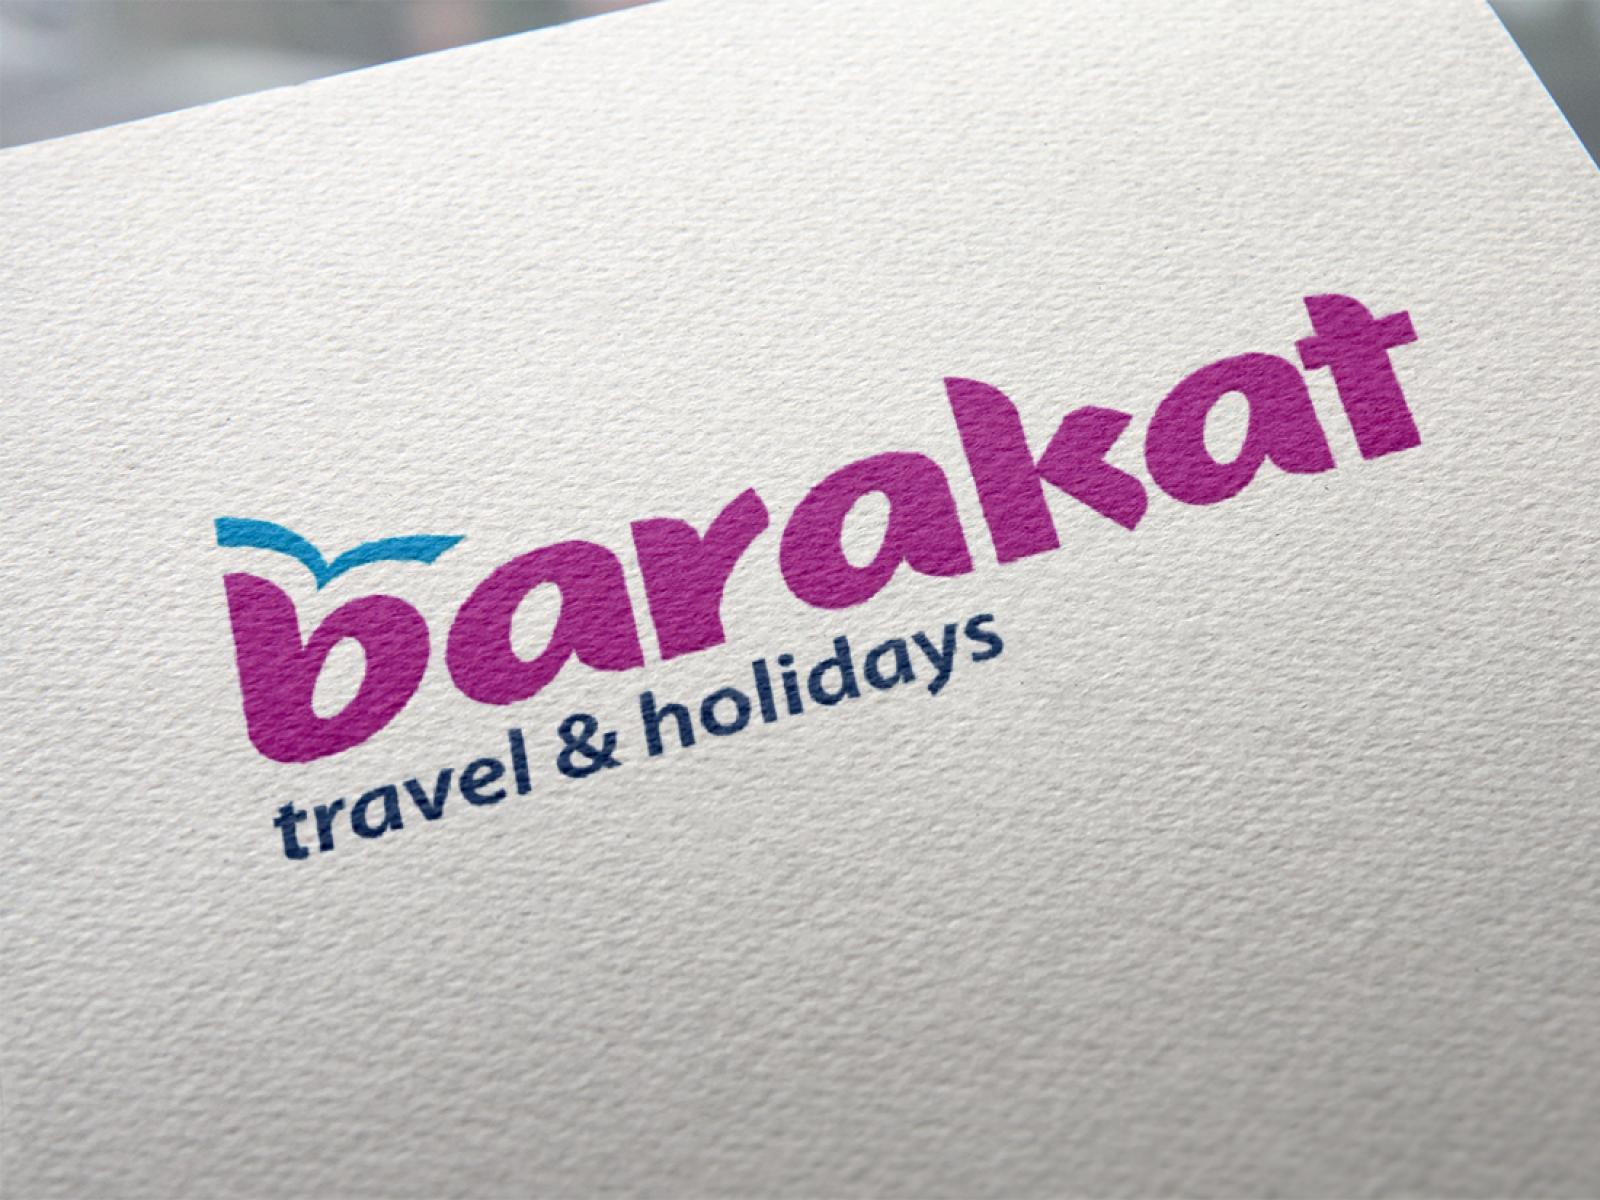 barakat travel tours